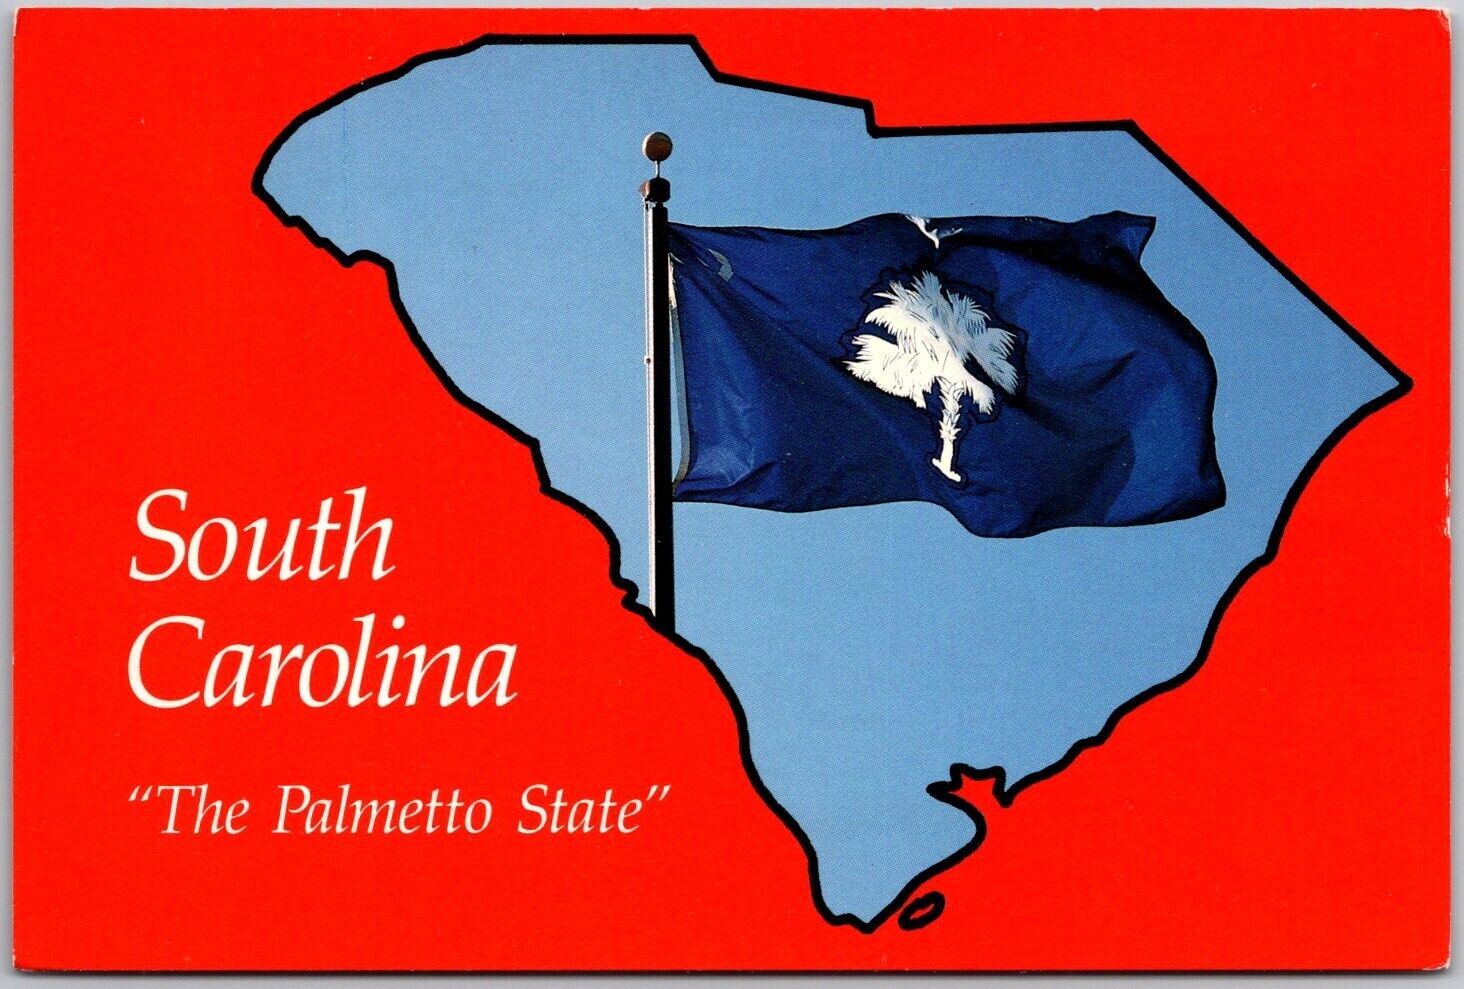 Postcard: South Carolina - The Palmetto State with Palmetto Tree on Blue Ba A168